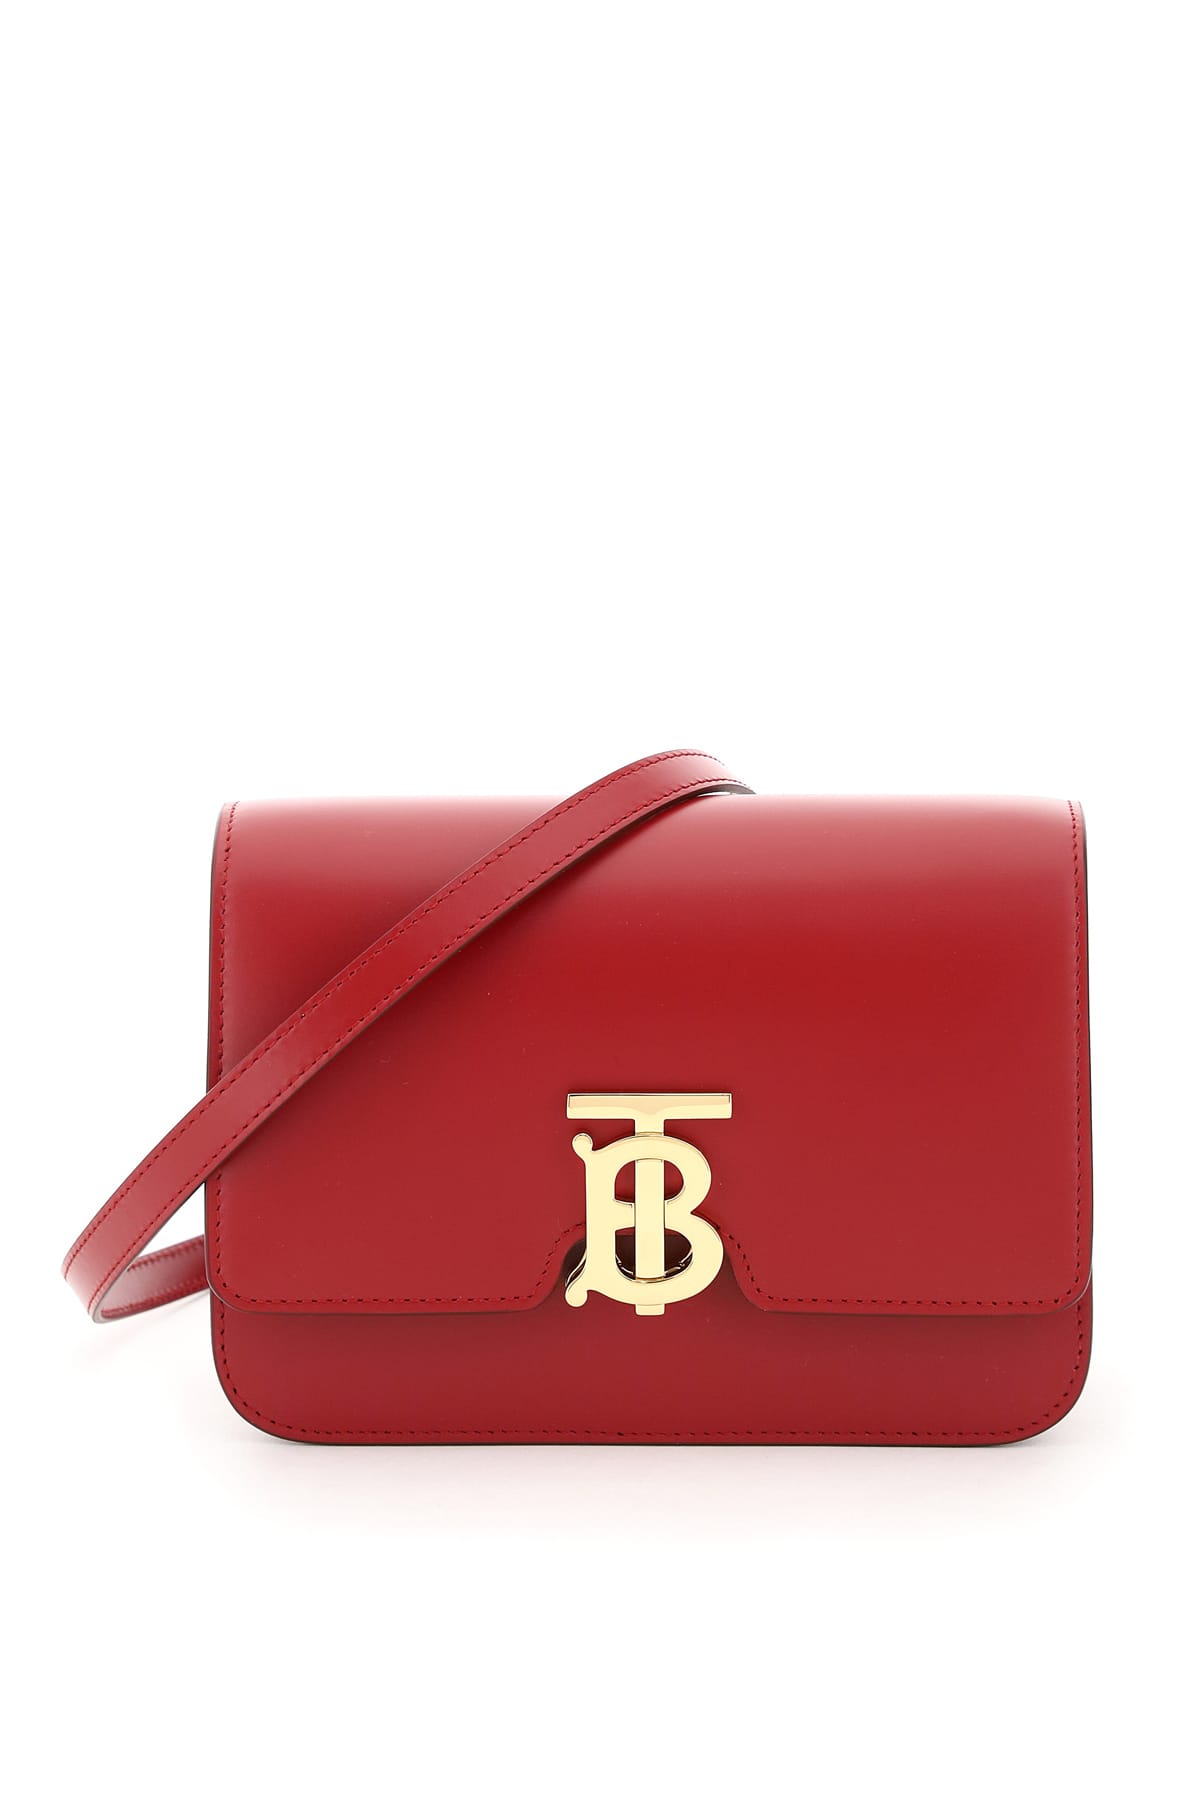 Burberry Crossbody Tb Small Bag In Dark Carmine (red)